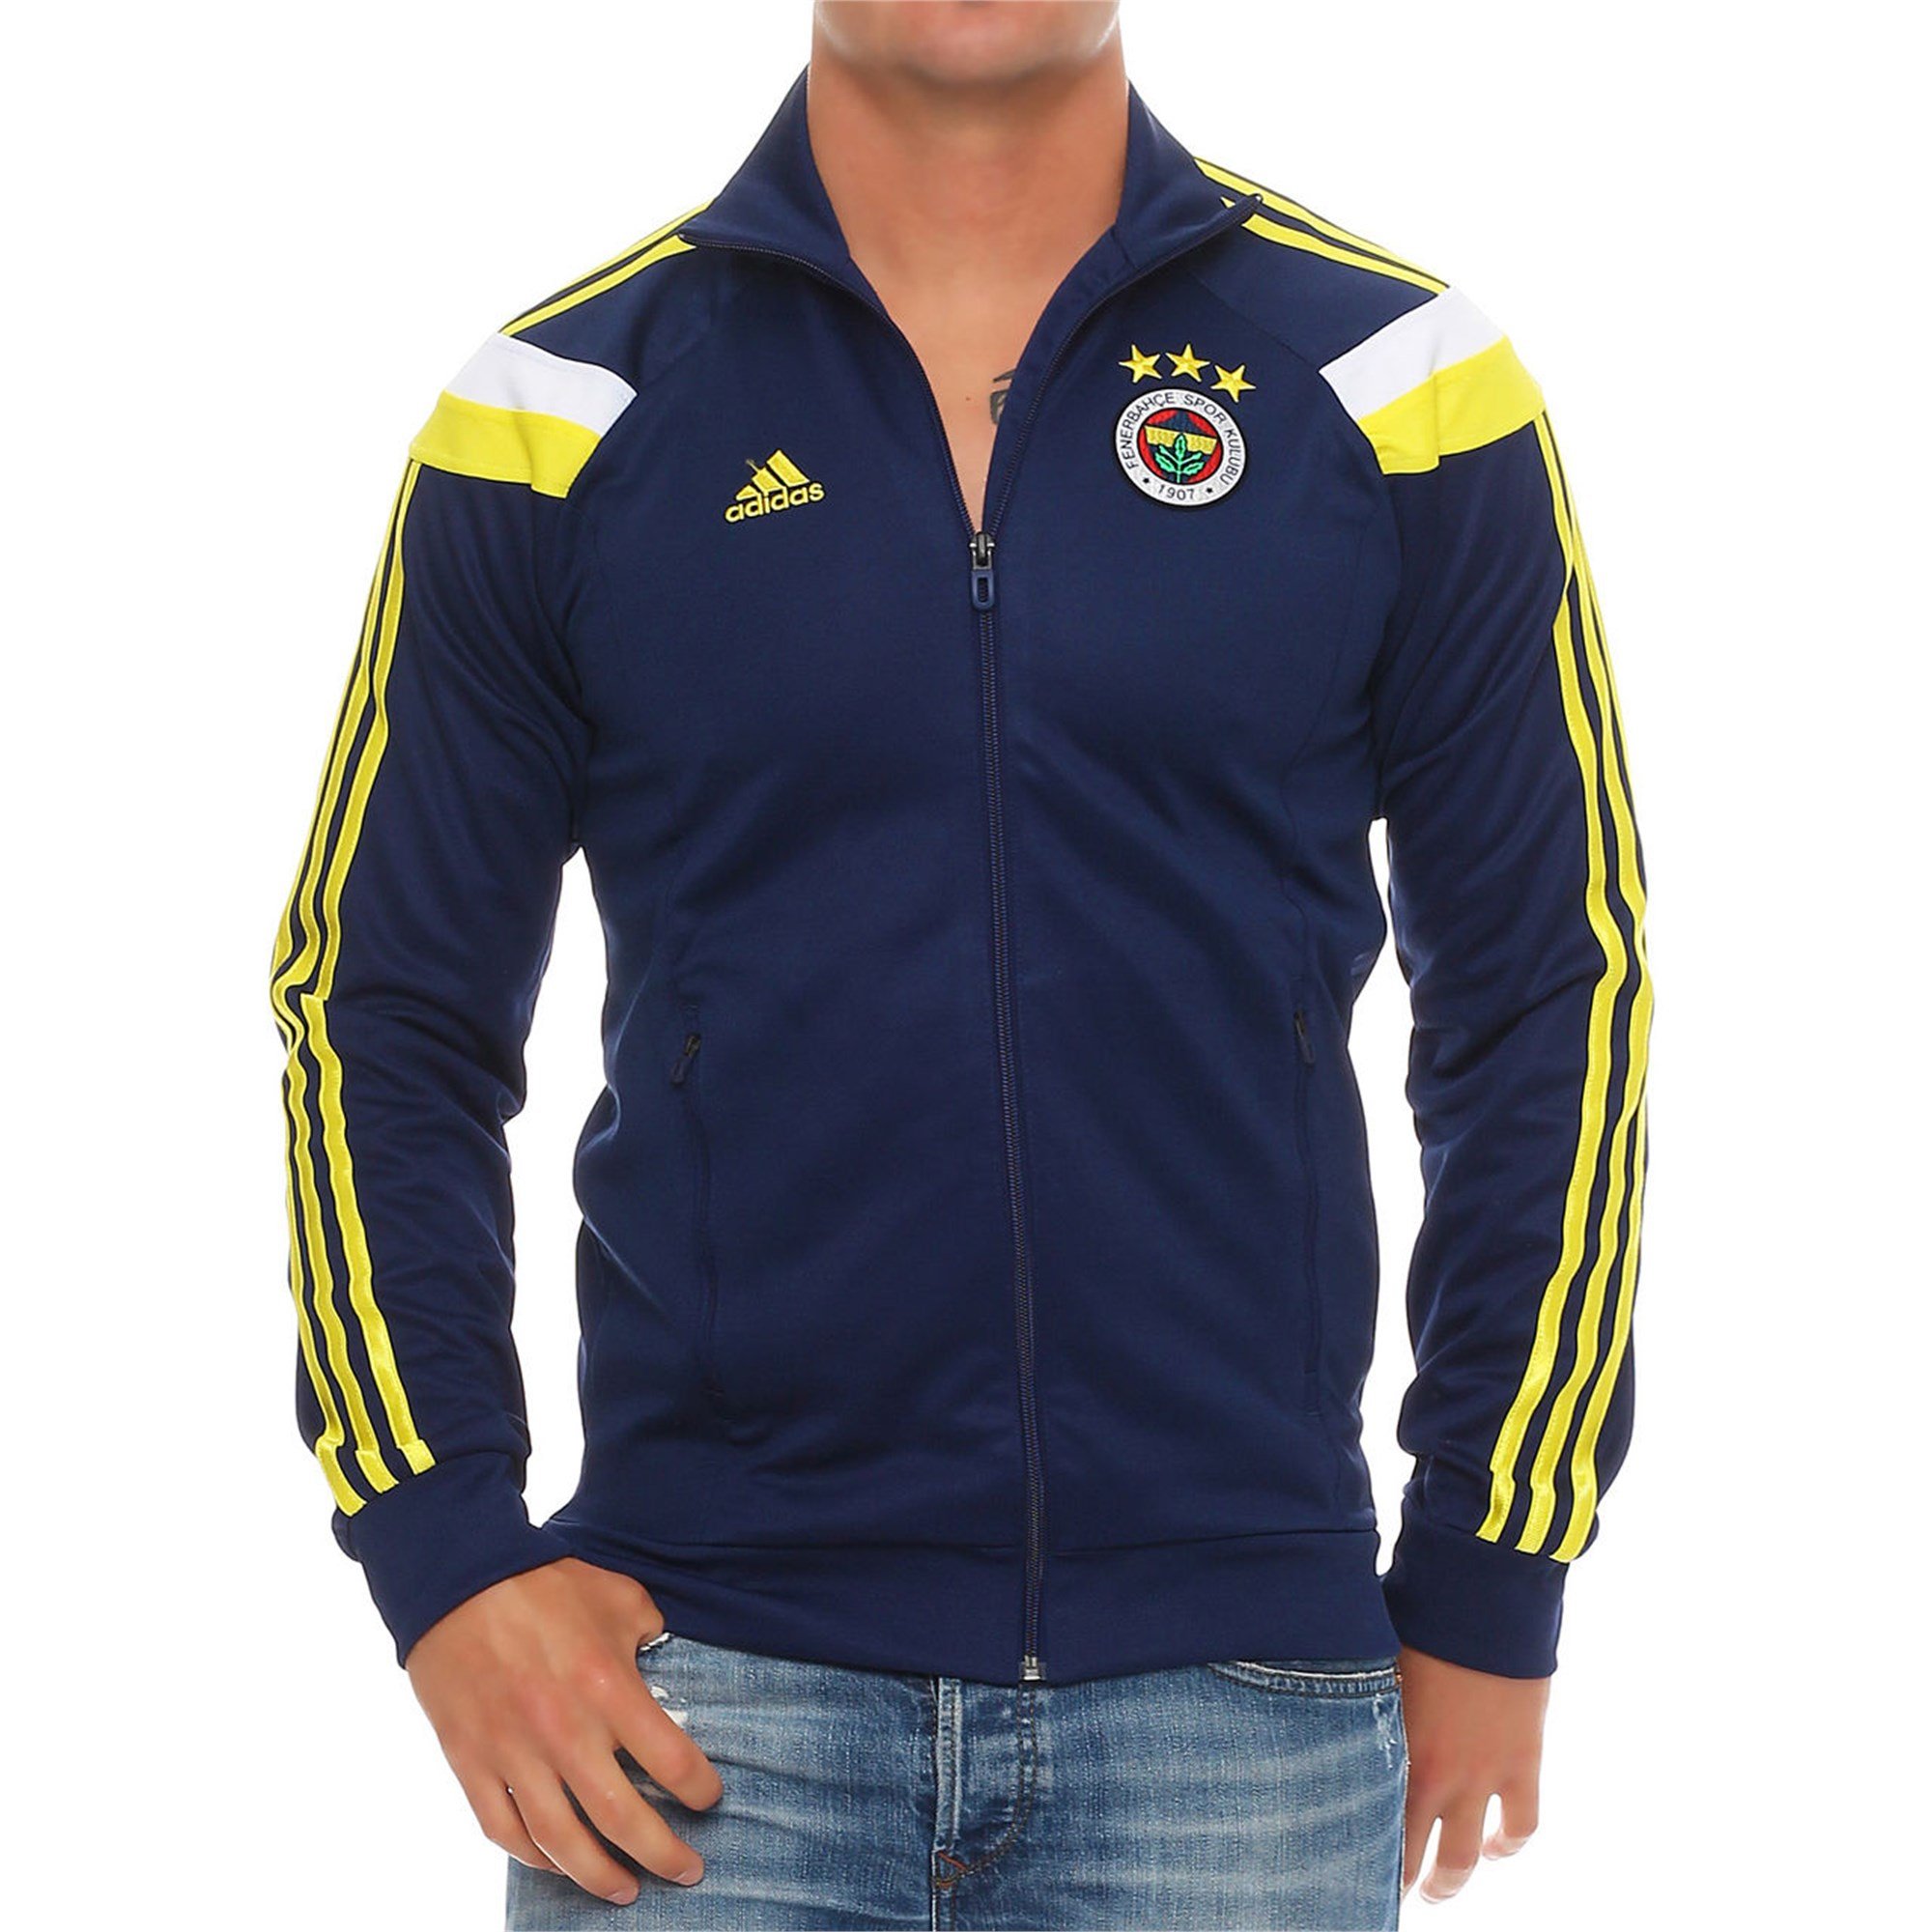 adidas Fenerbahçe Anthem Erkek Sweatshirt Ürün kodu: H77631 | Etichet Sport